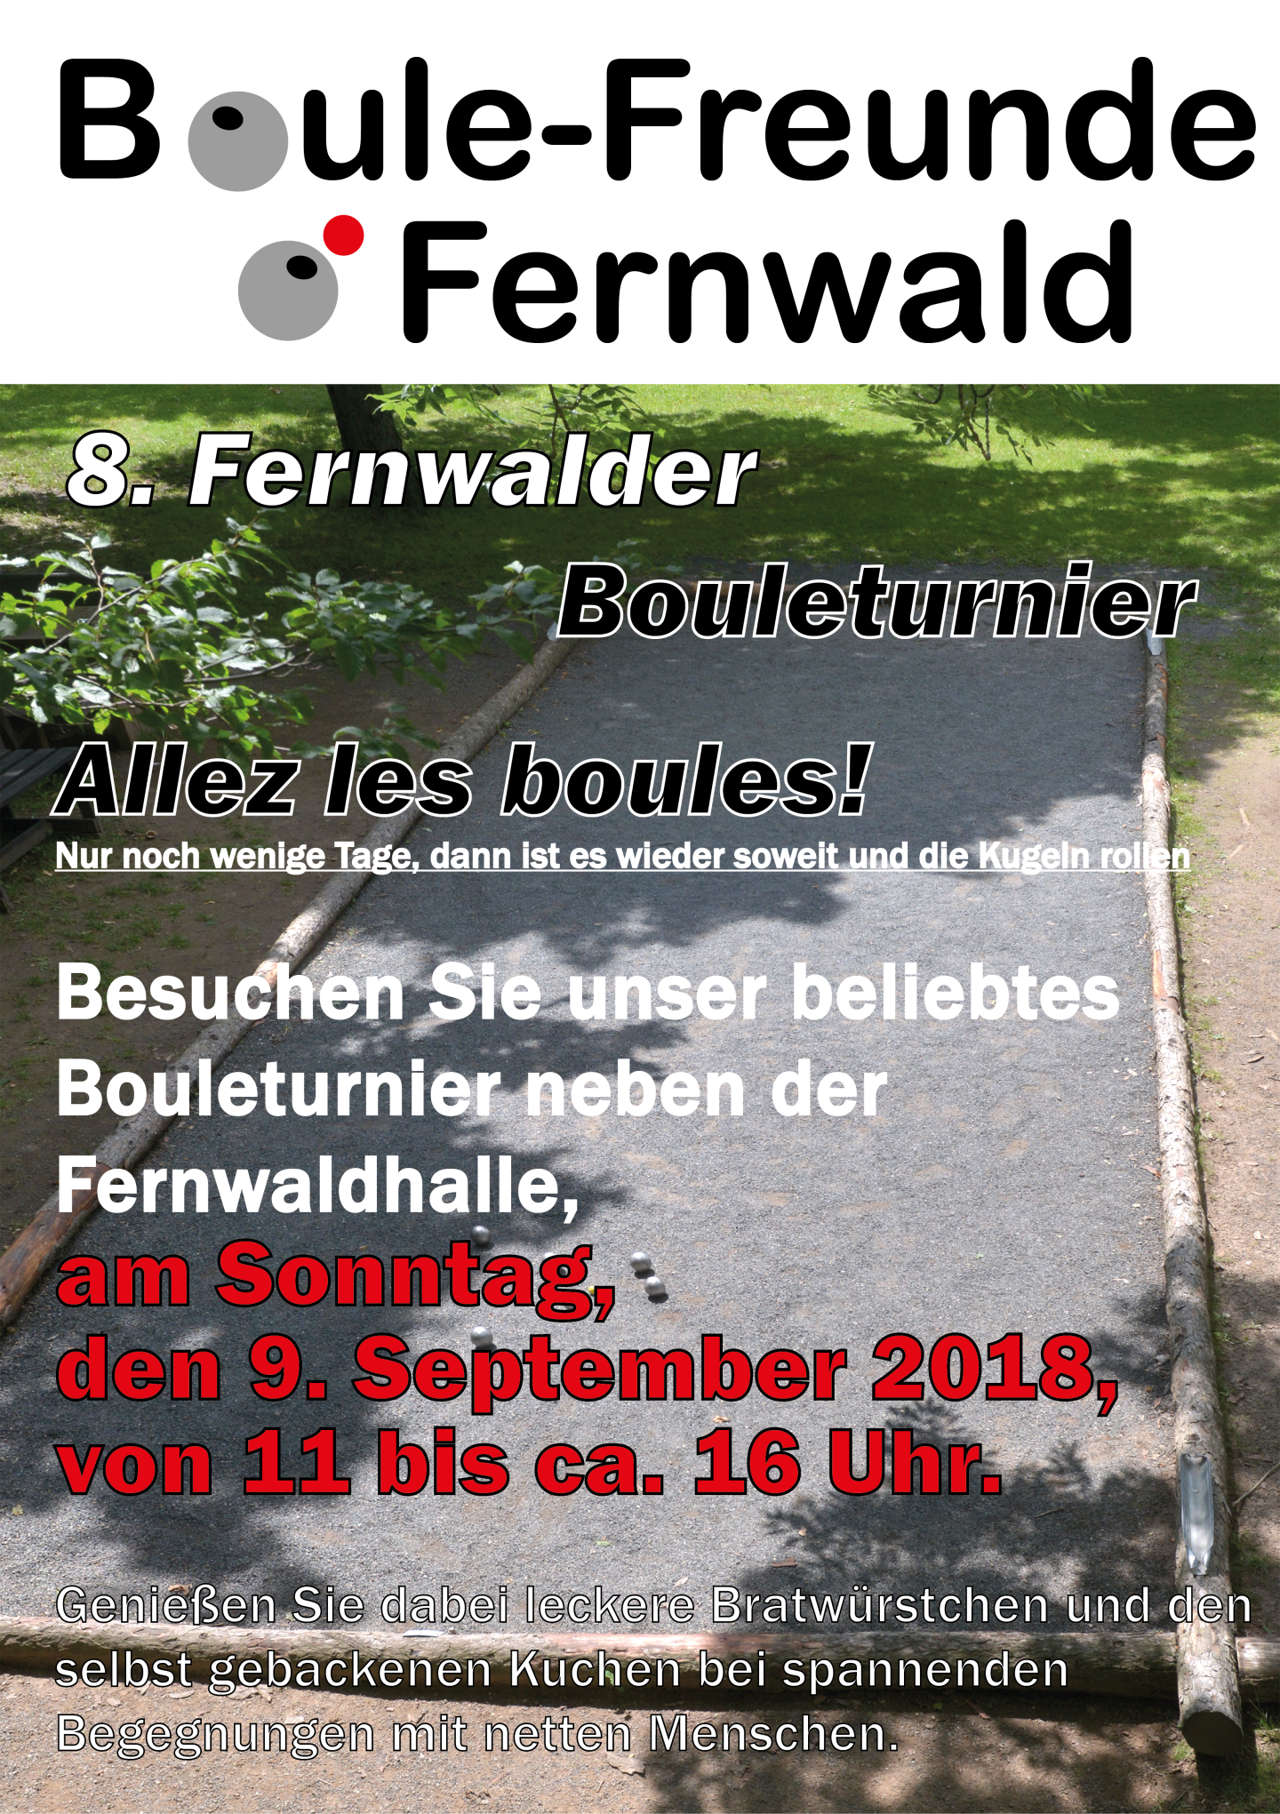 You are currently viewing 8. Fernwalder Bouleturnier der Boule-Freunde Fernwald